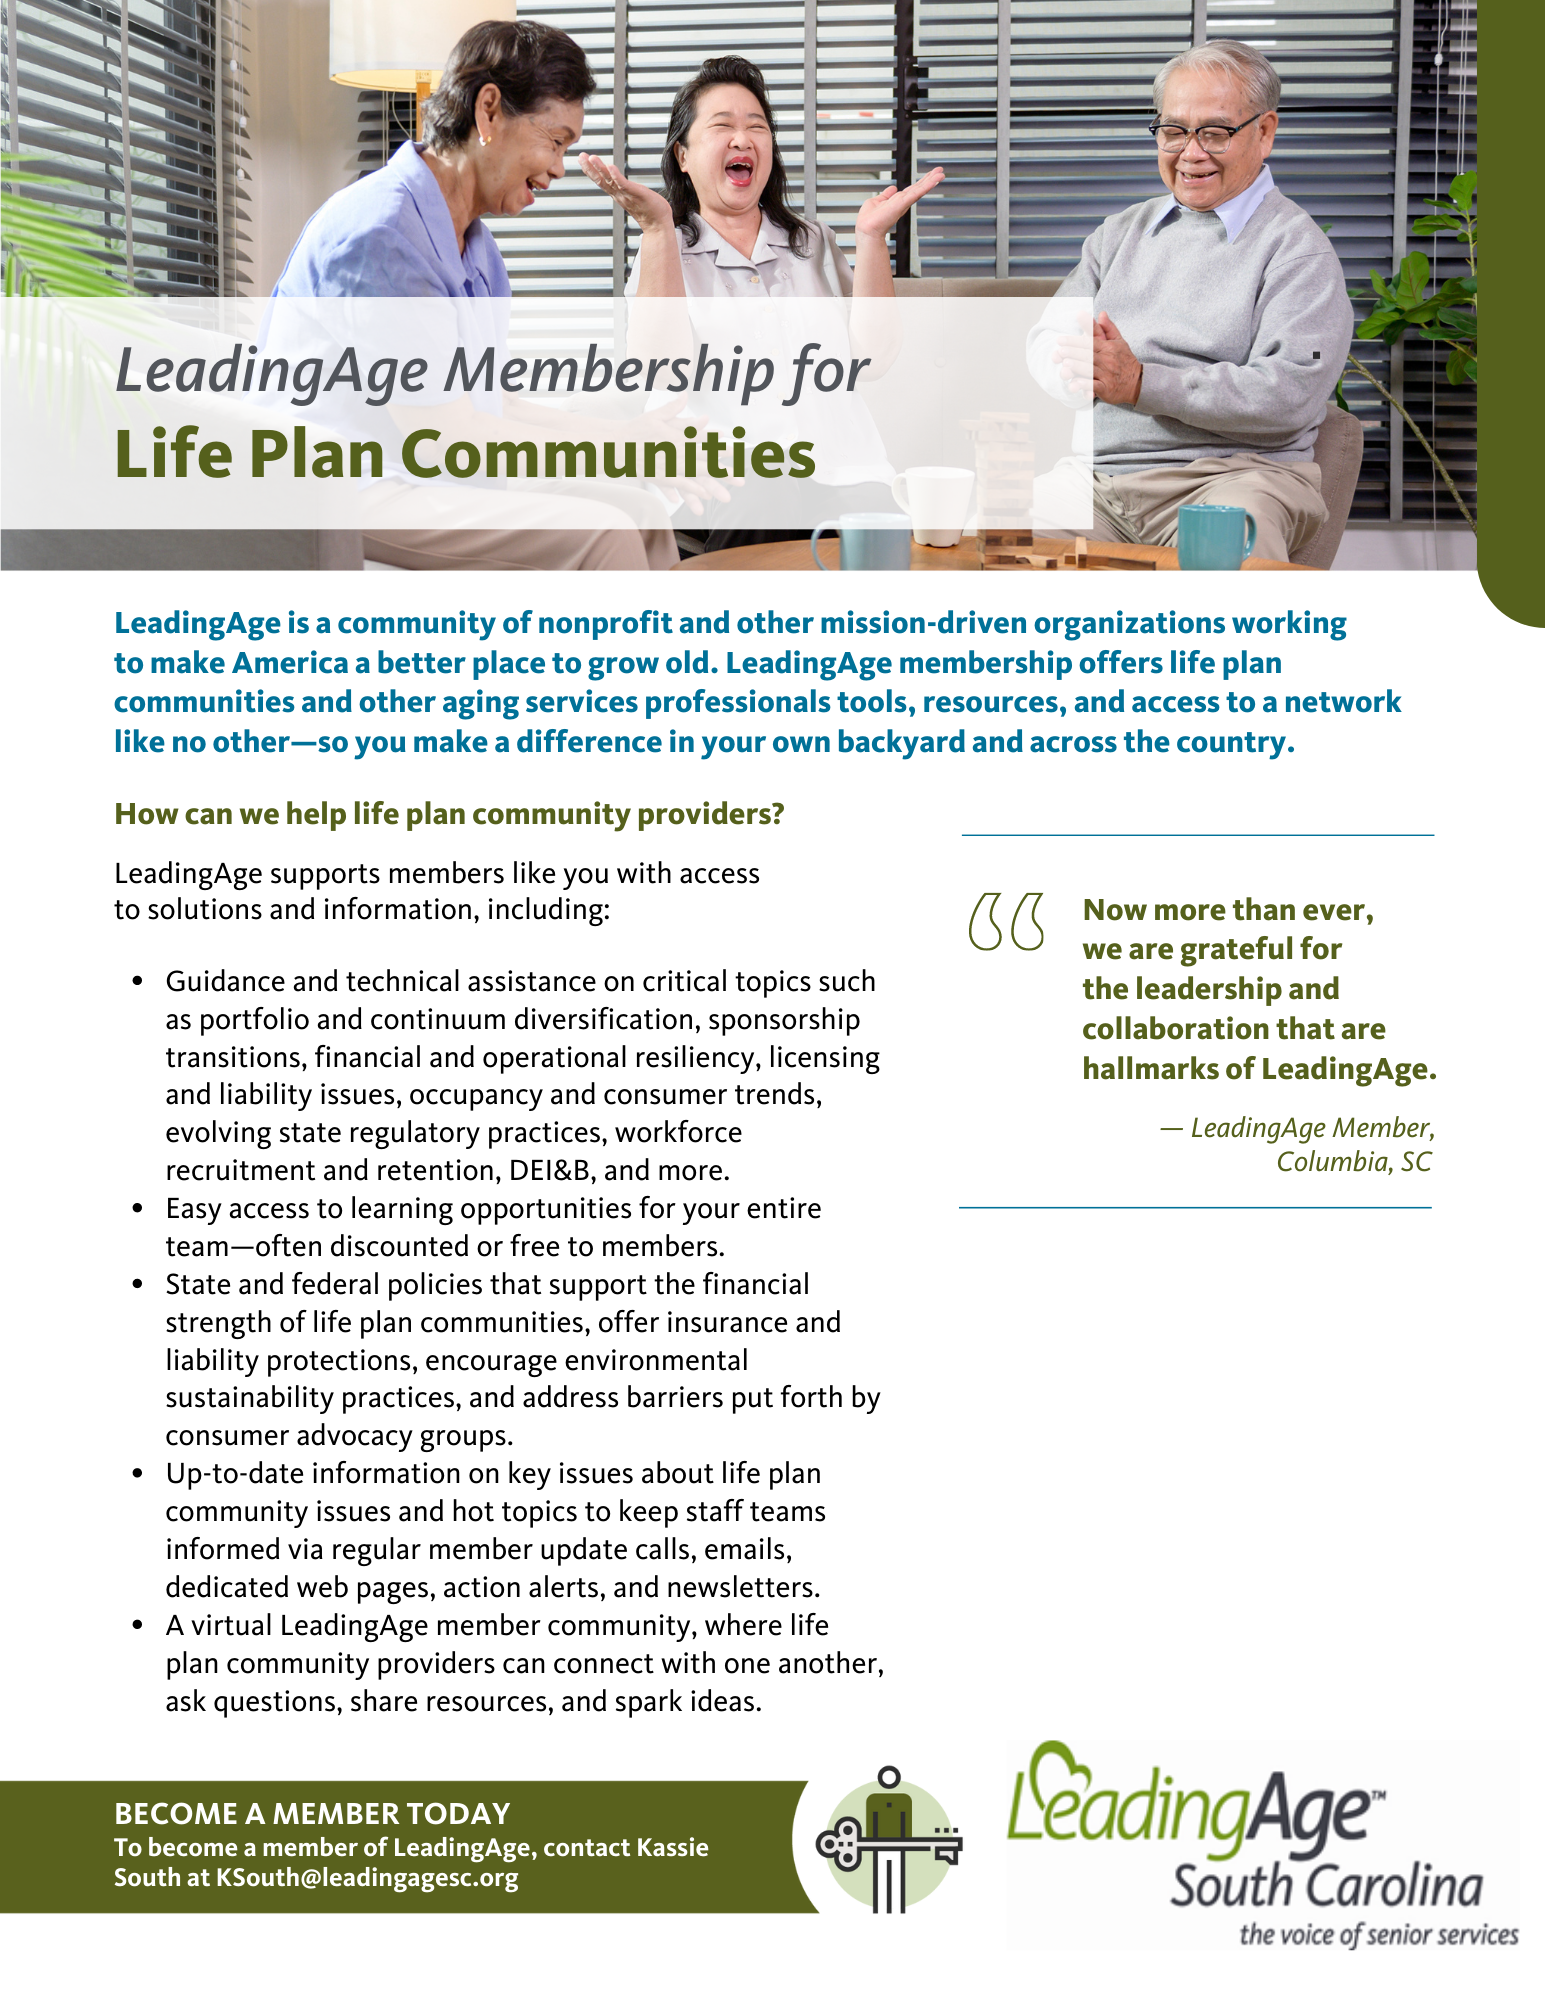 LeadingAgeSC - Membership for Life Plan Communities